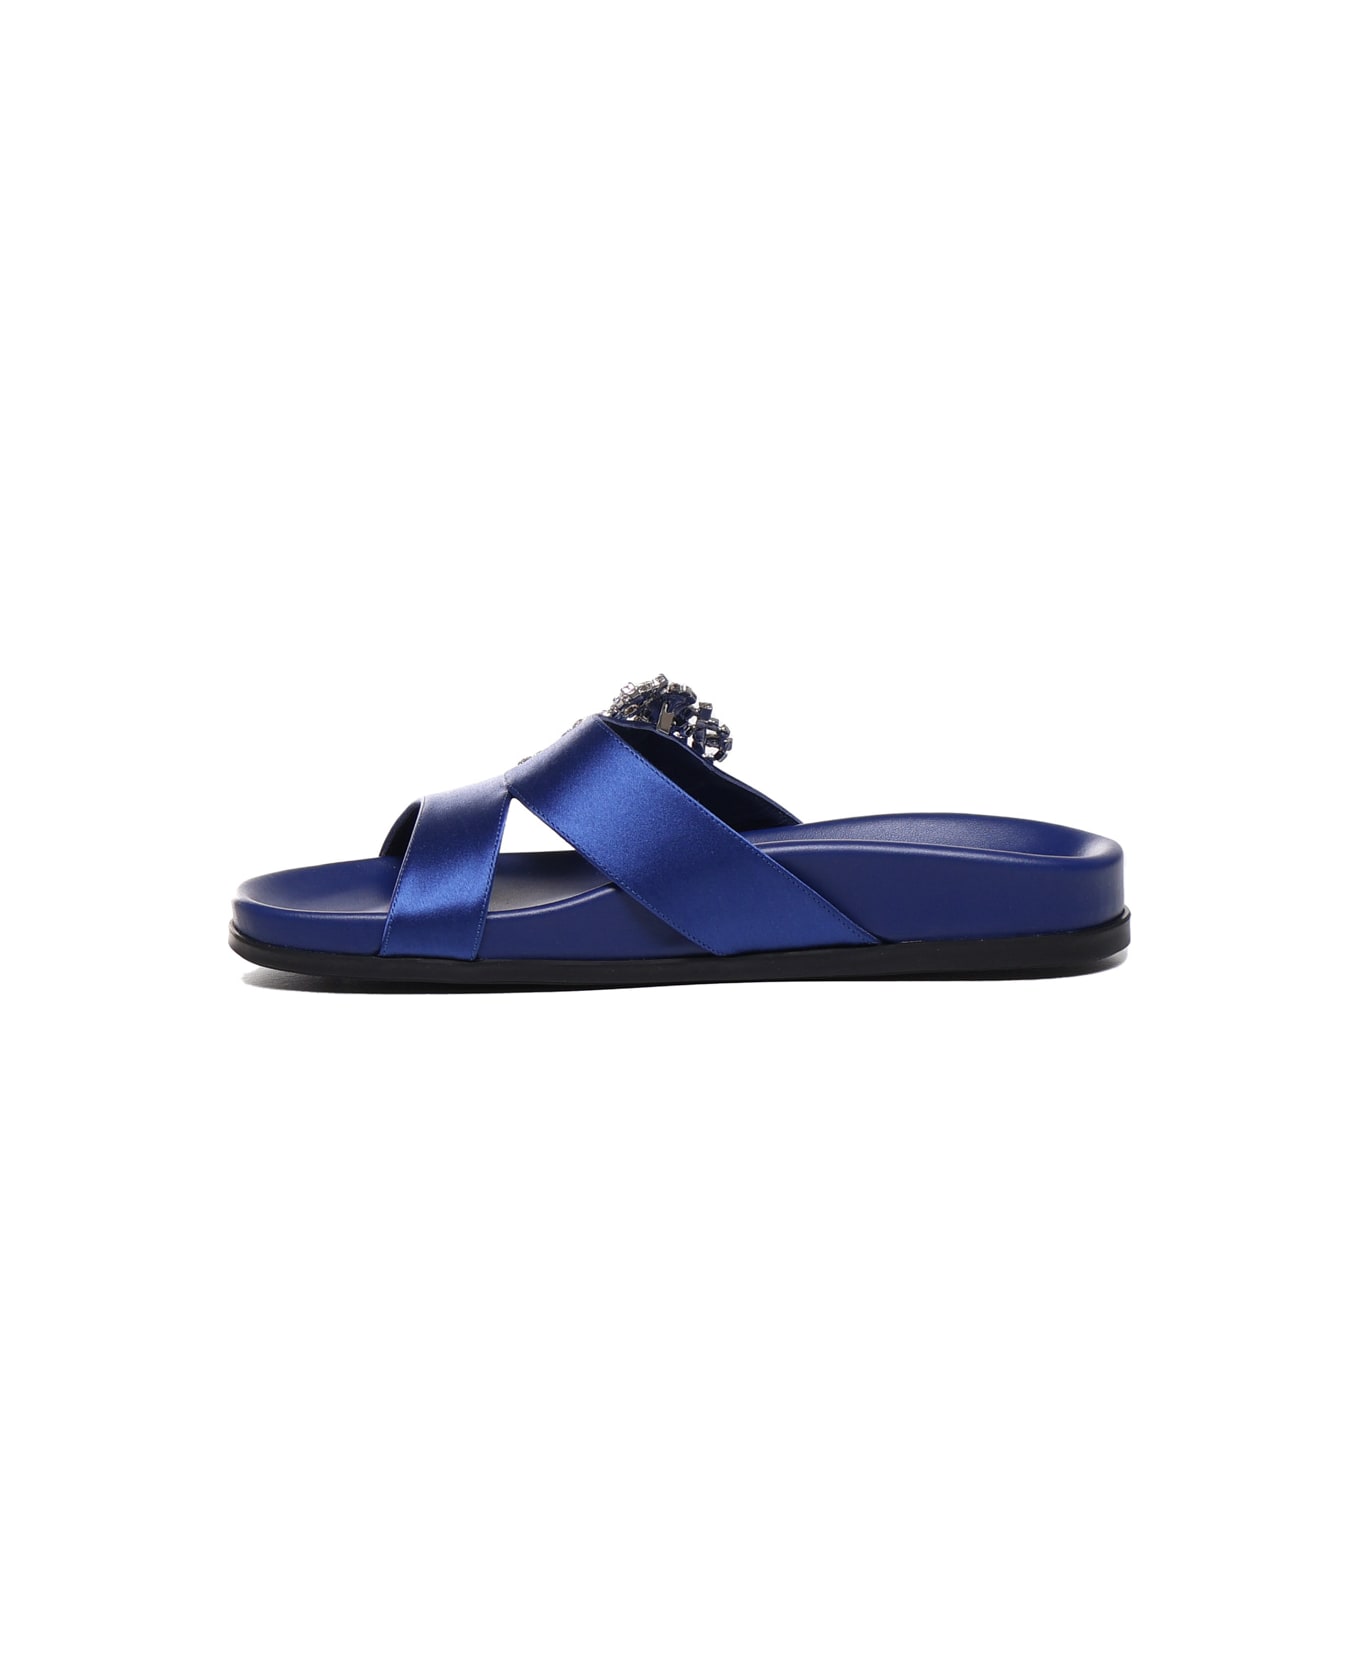 Manolo Blahnik Chilanghi Flat Sandals - Blue satin